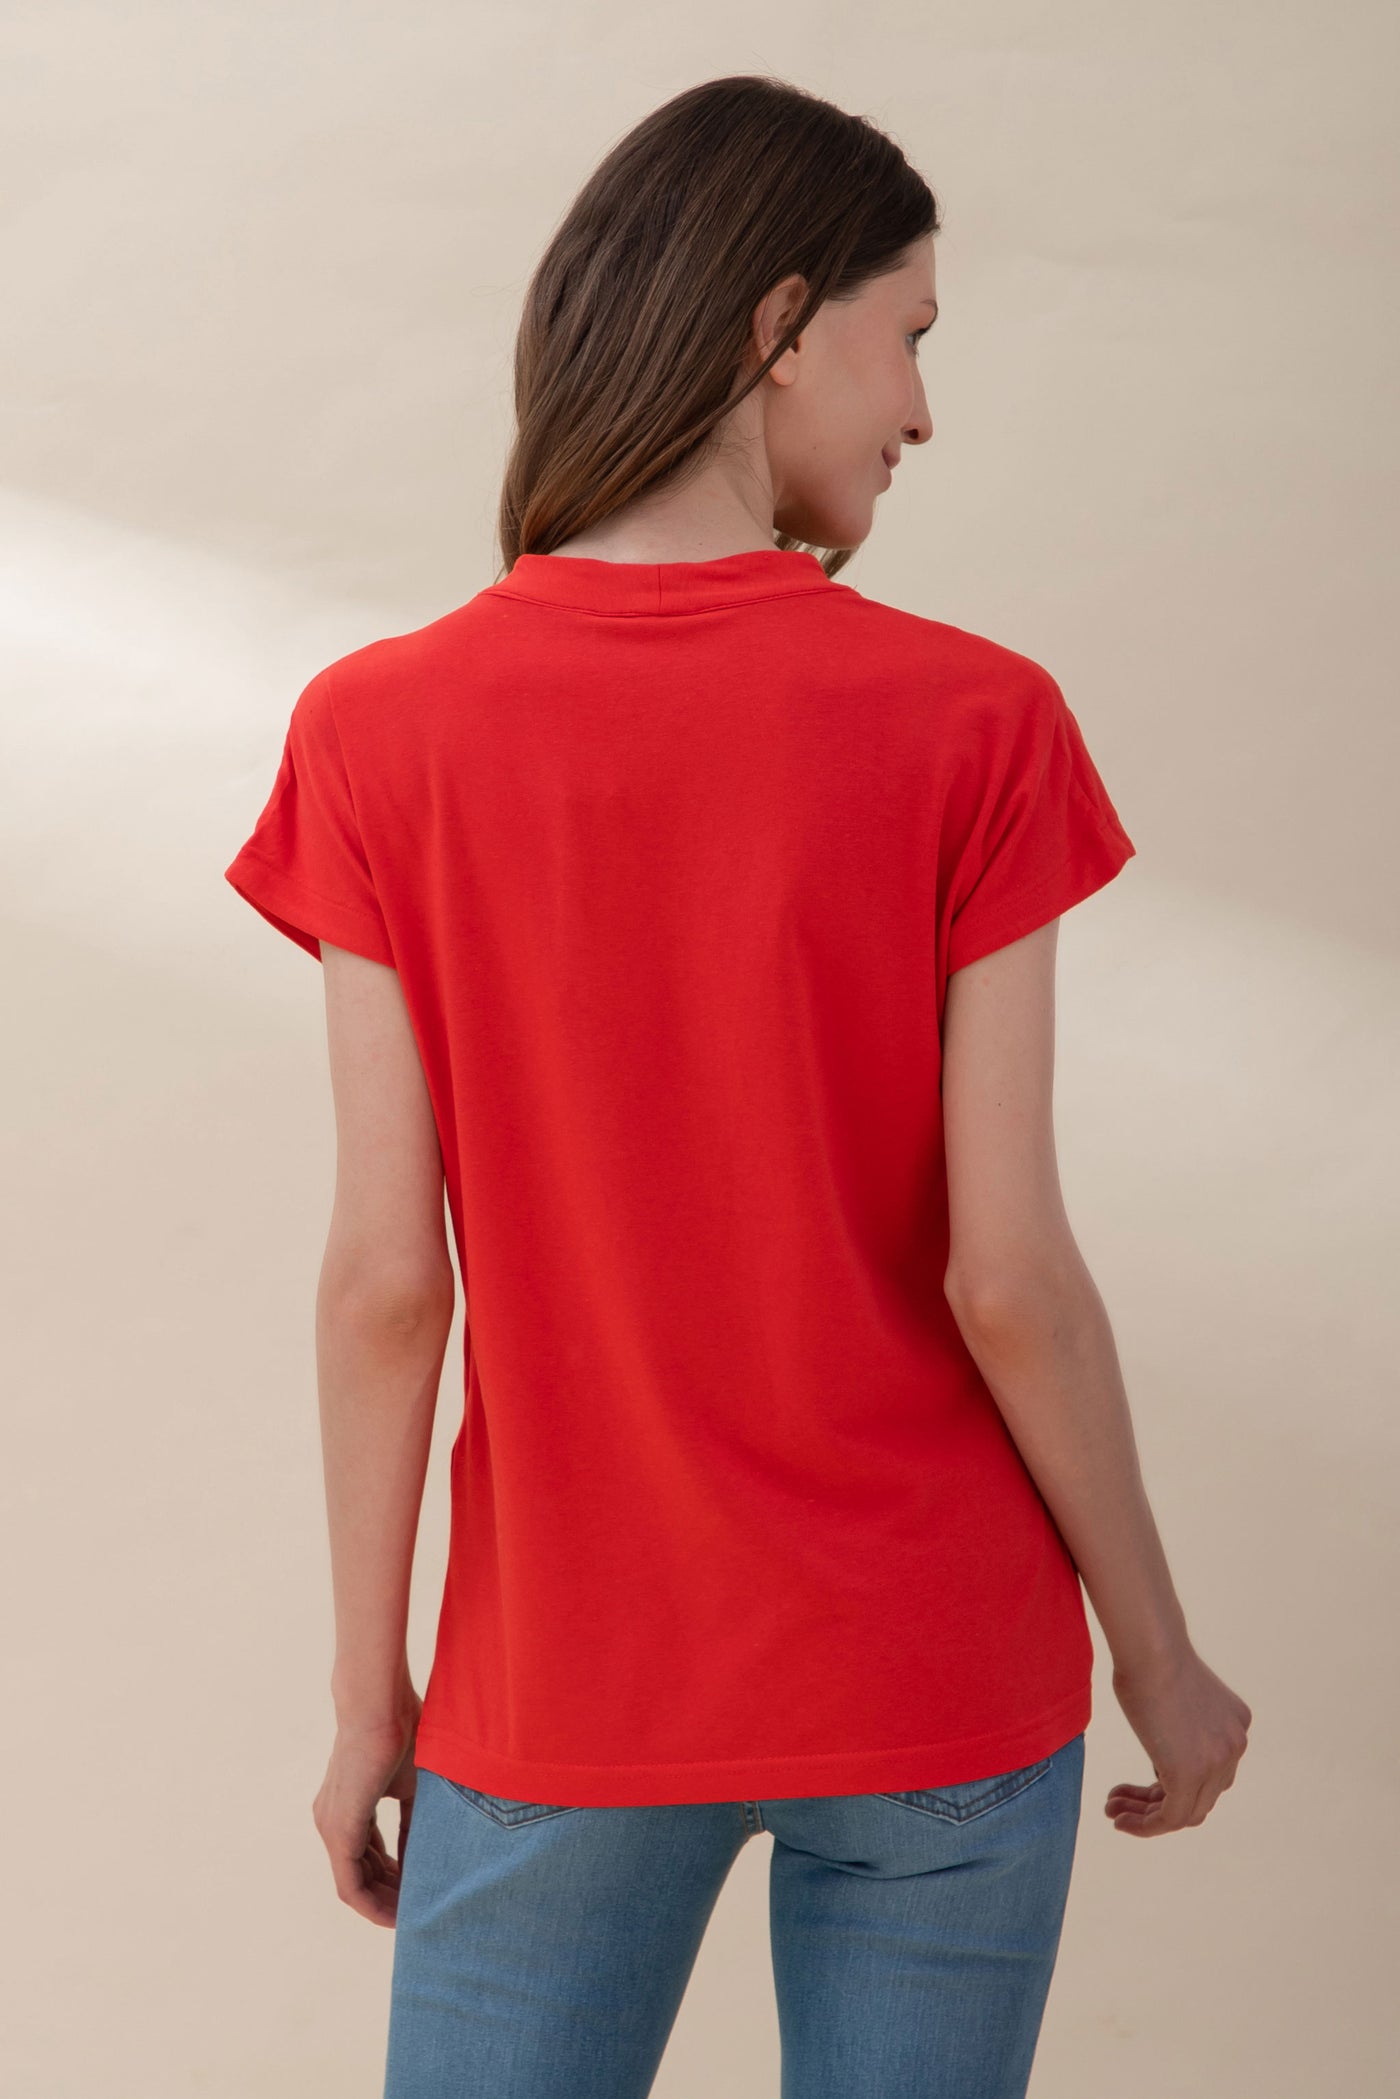 Poinsettia Red T-shirt